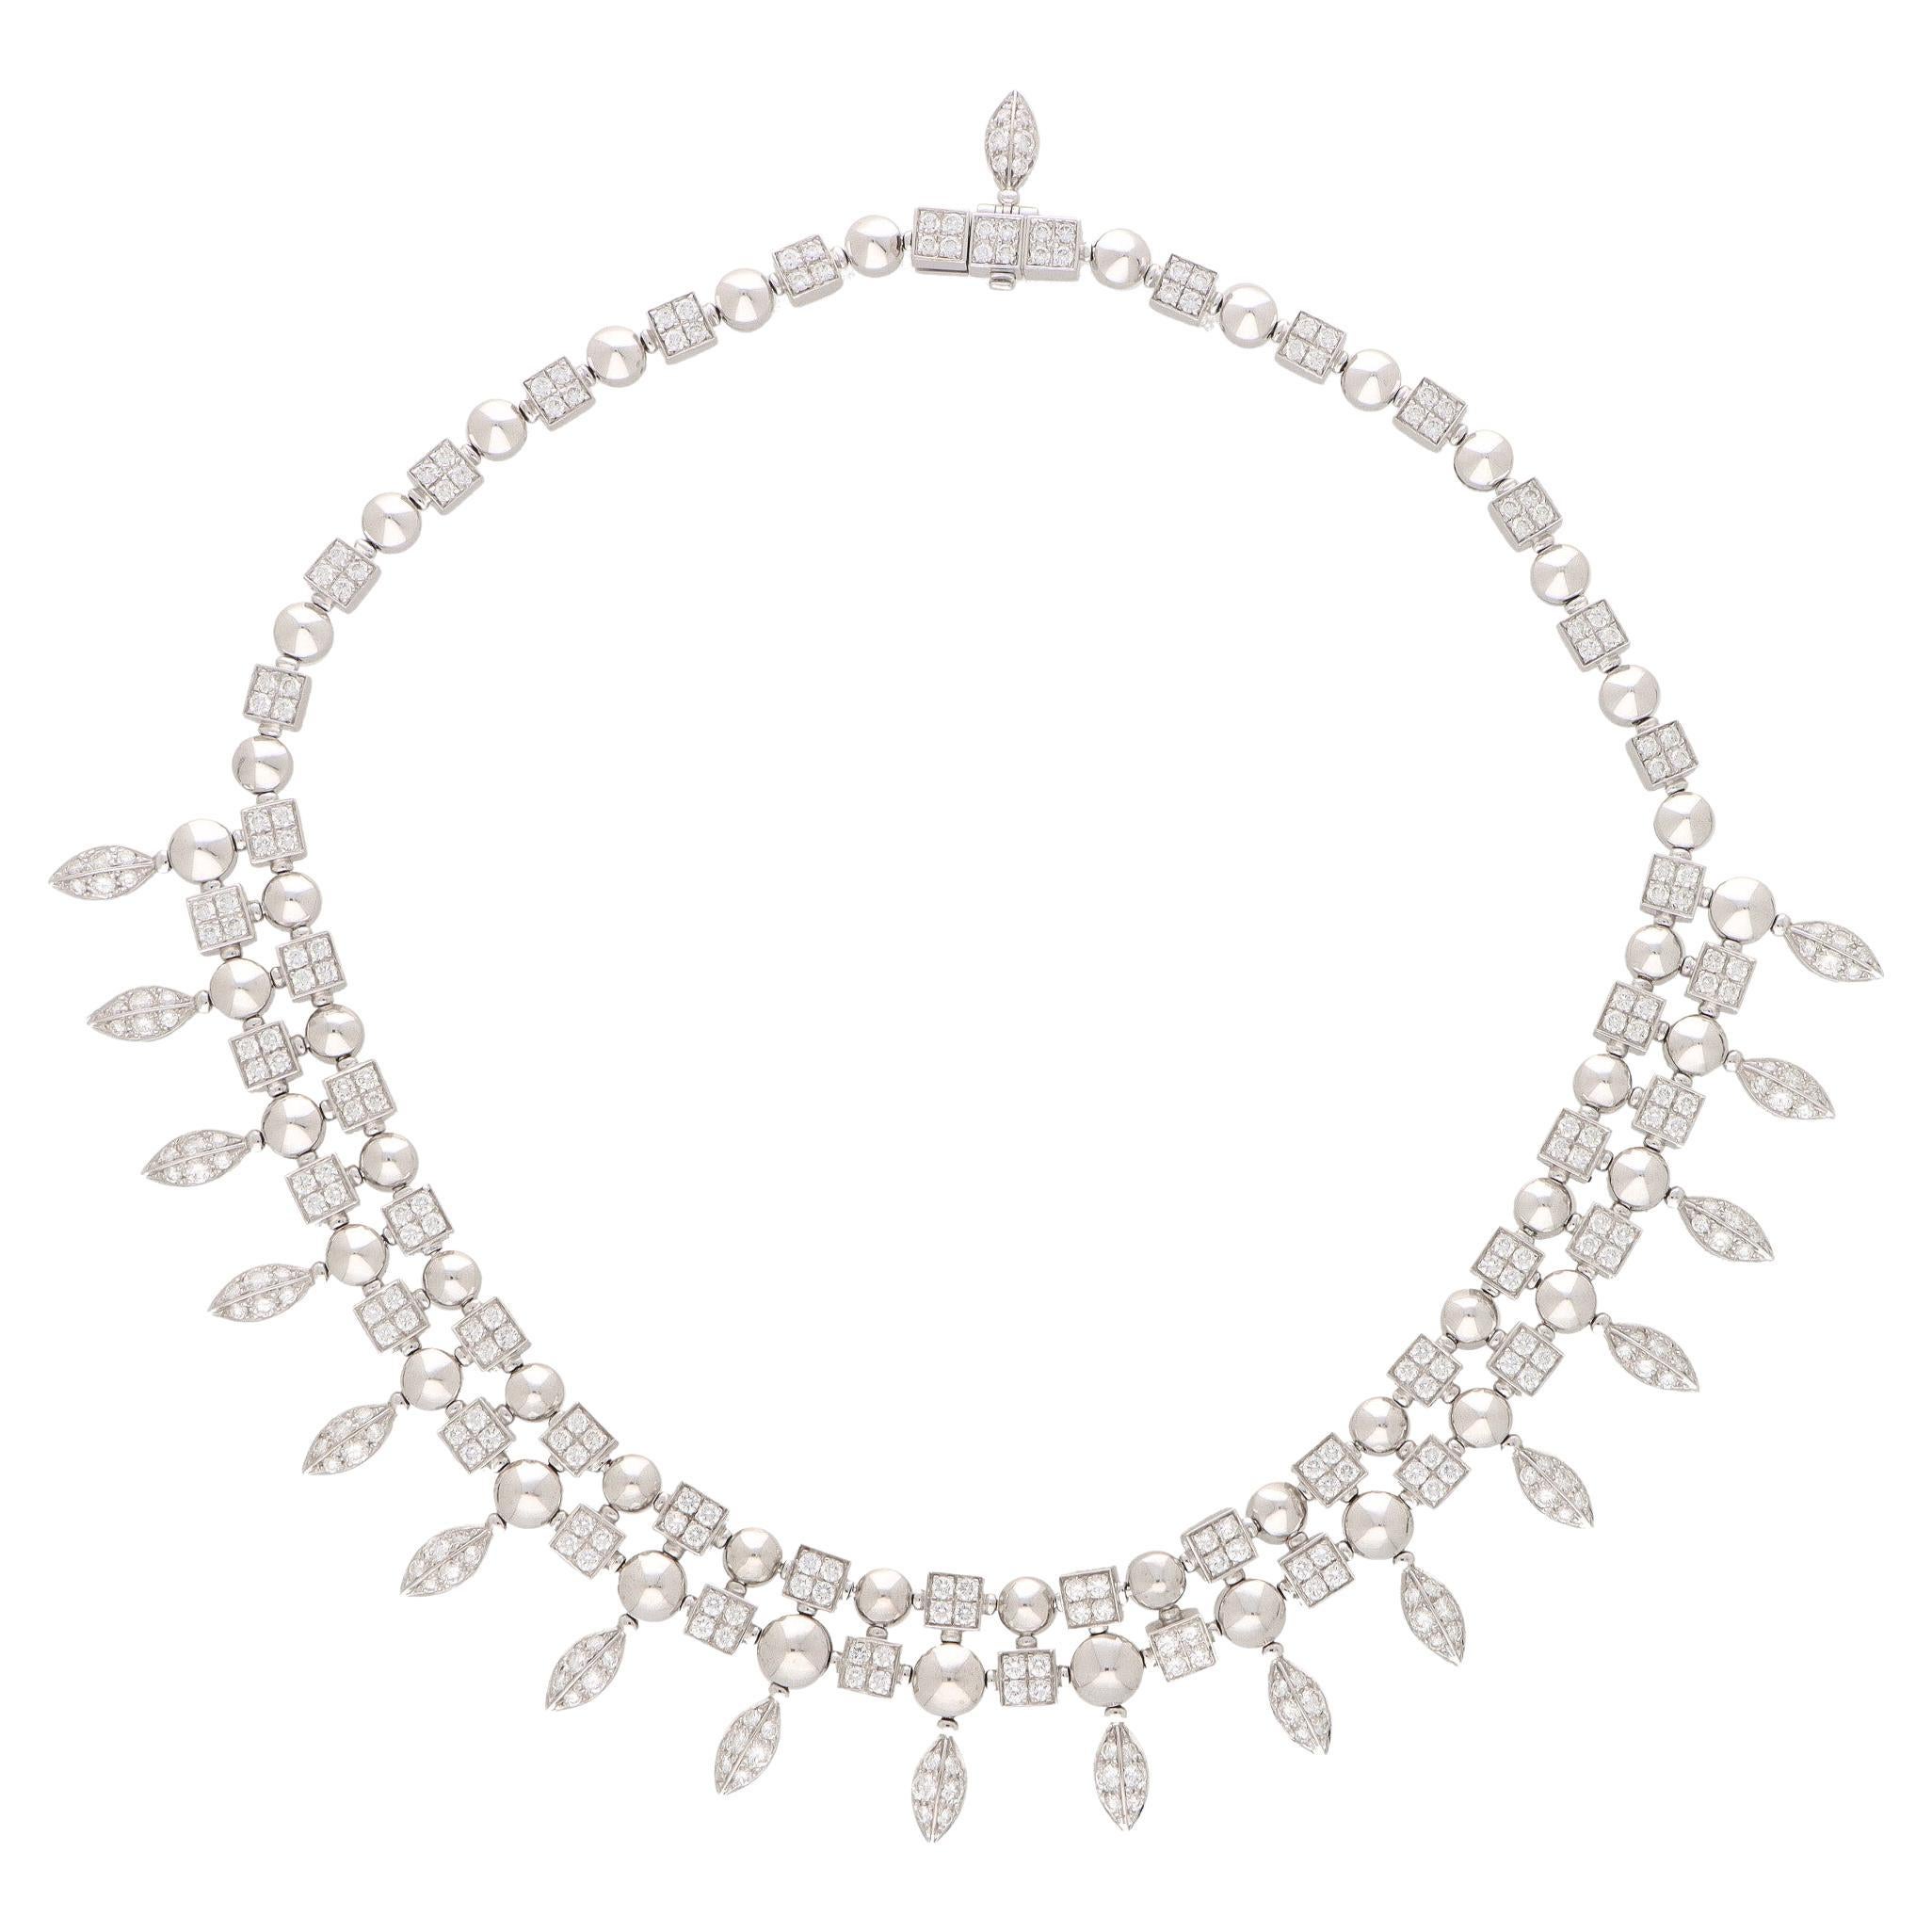 Vintage Bvlgari 'Lucea' Diamond Choker Necklace in 18k White Gold